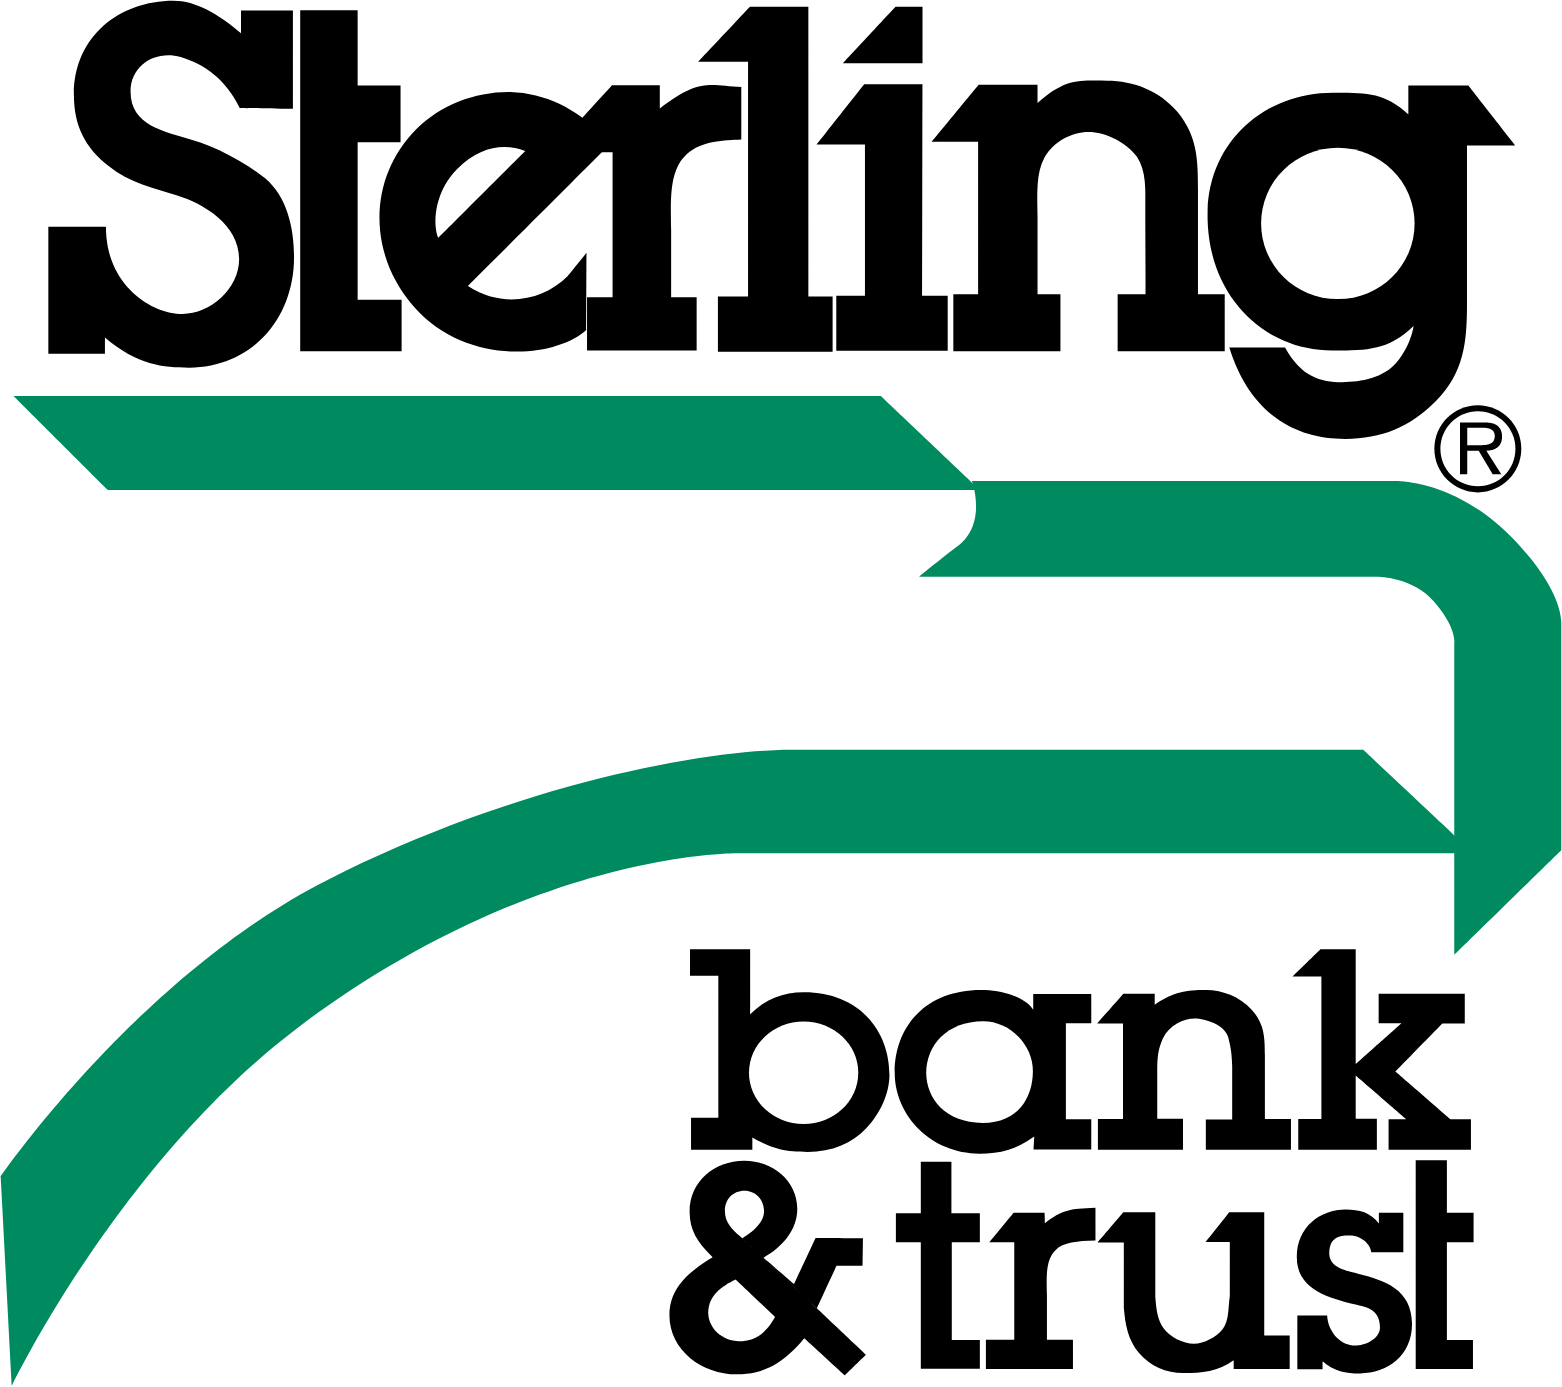 Sterling Bancorp logo large (transparent PNG)